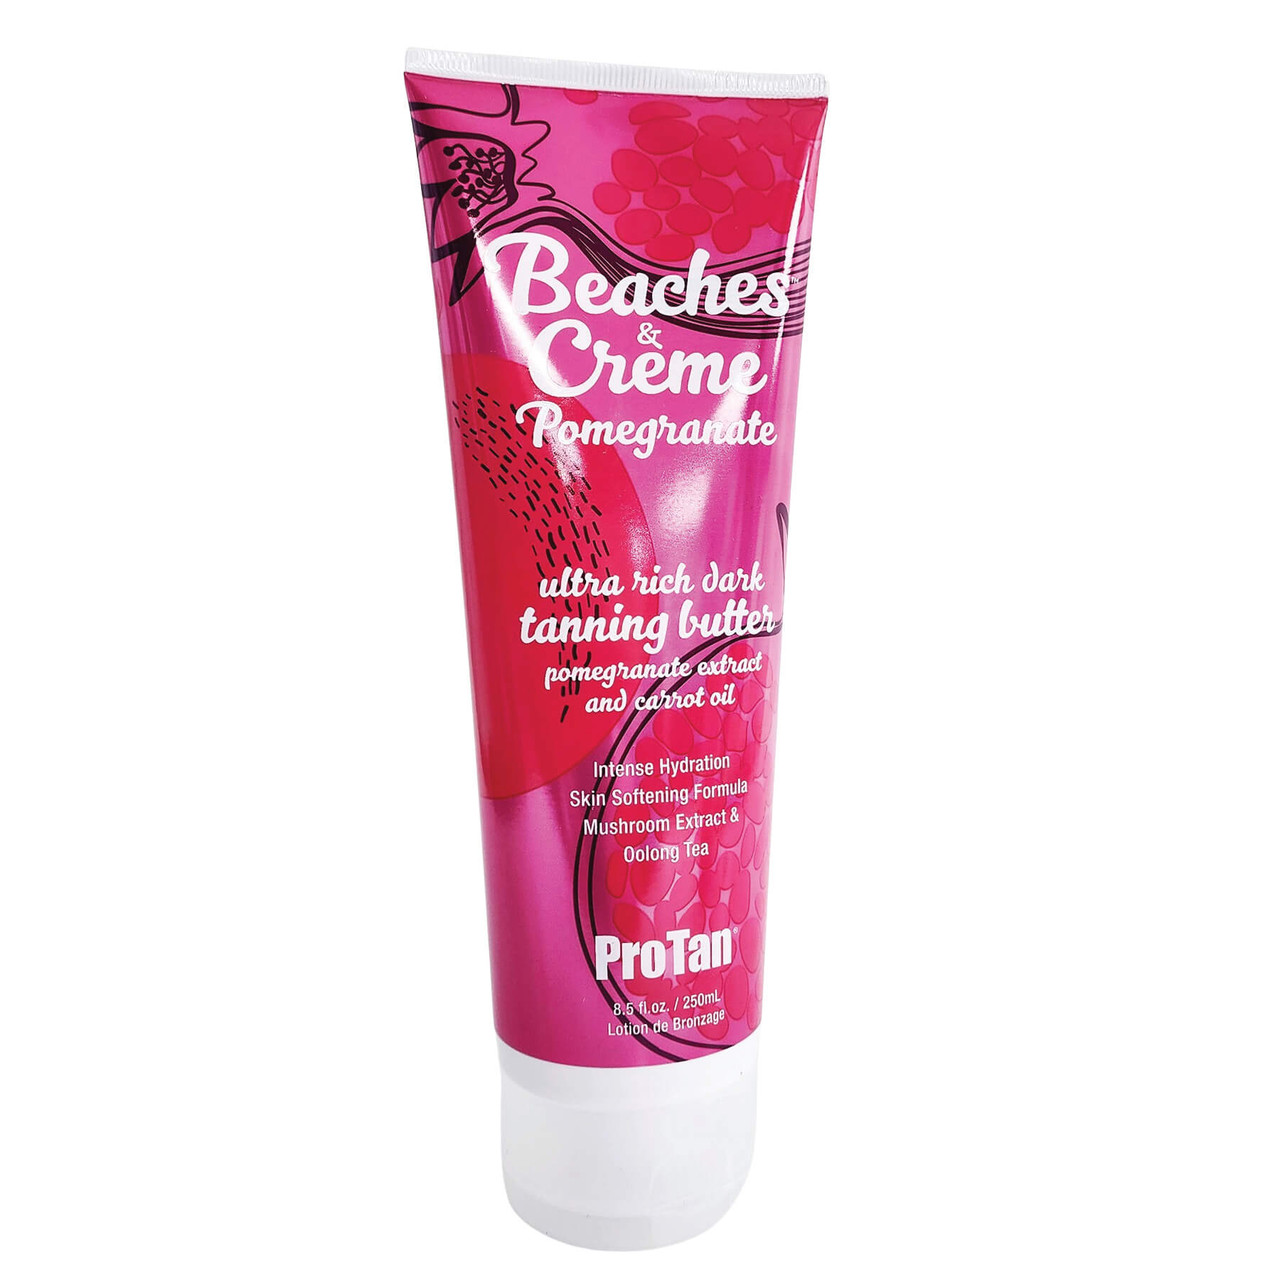 Pro Tan Beaches & Crème Pomegranate Ultra Rich Dark Tanning Butter - 8.5 oz.